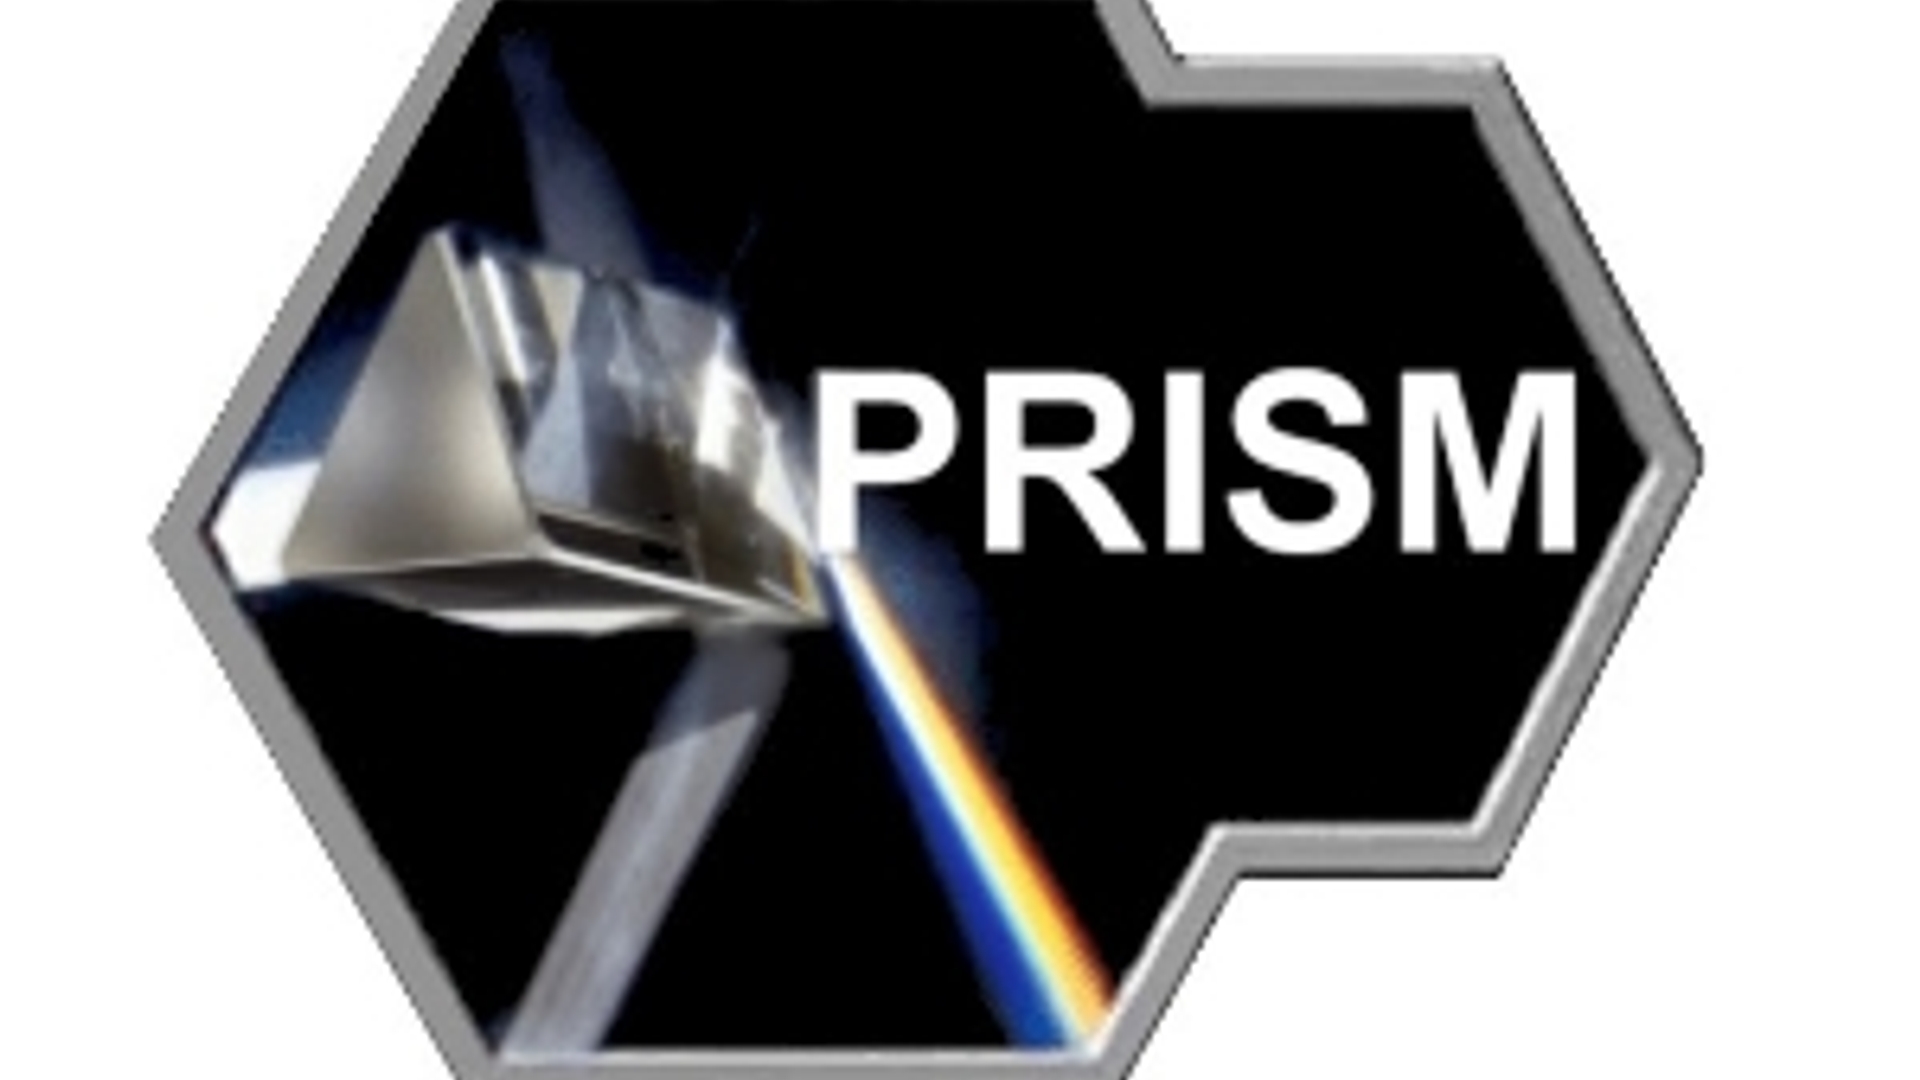 PRISM_logo.jpg